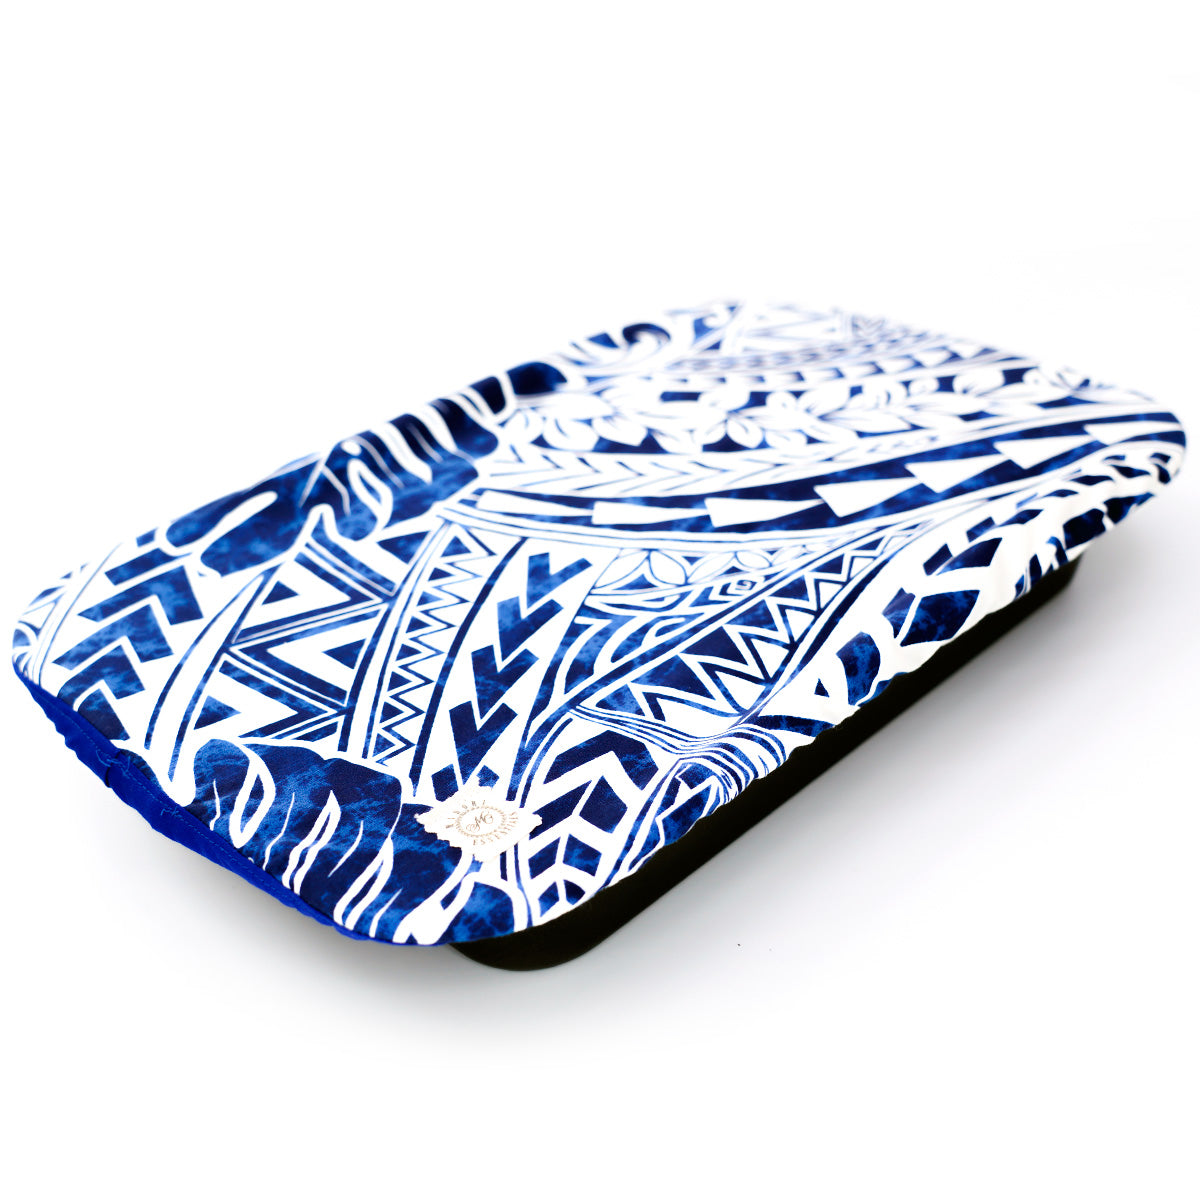 Reusable Washable 9"x13" Pan Covers Eco Friendly Alternative - Blue